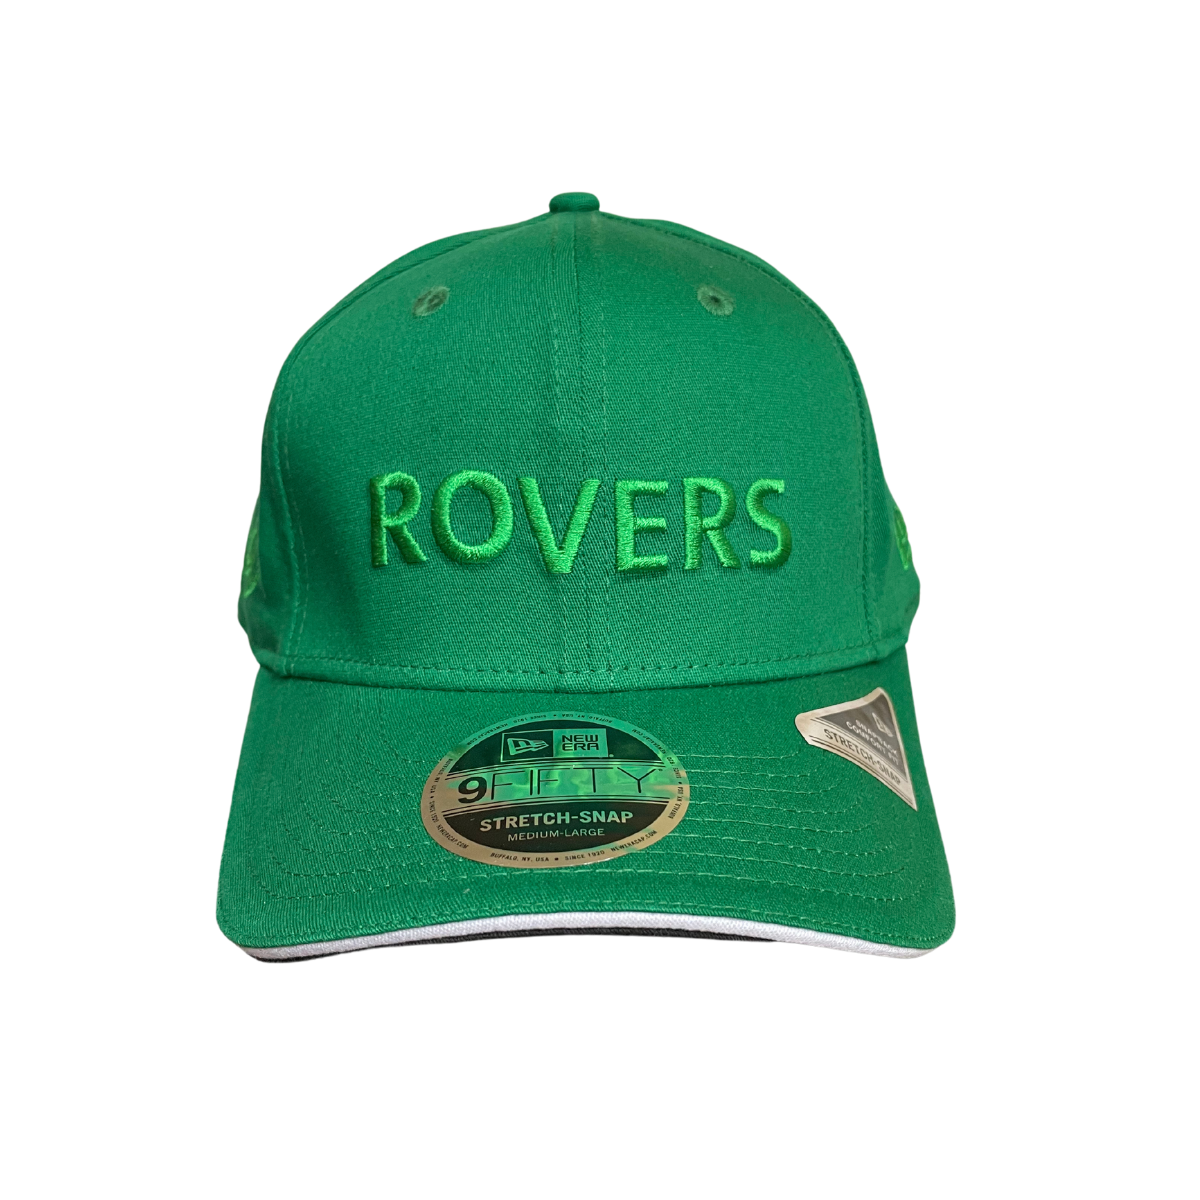 New Era Adjustable Cap - Green – Shamrock Rovers FC